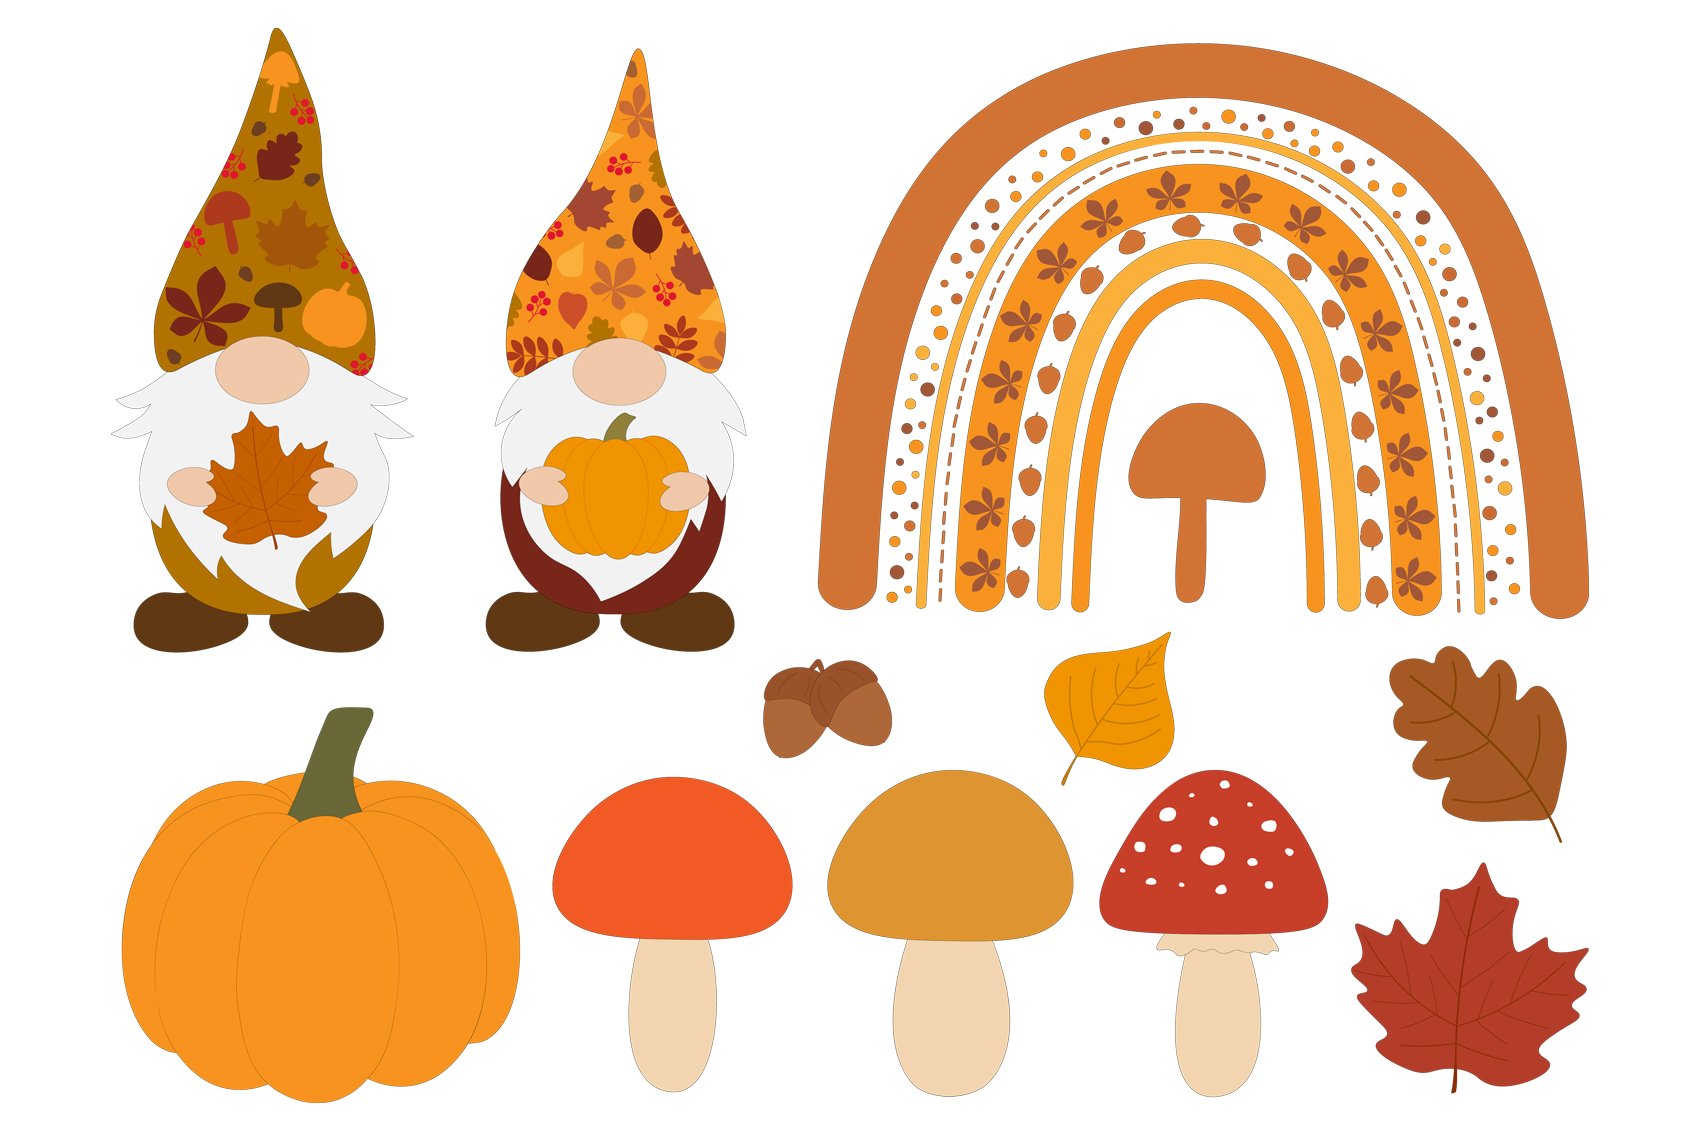 Autumn elements for full illustrations.